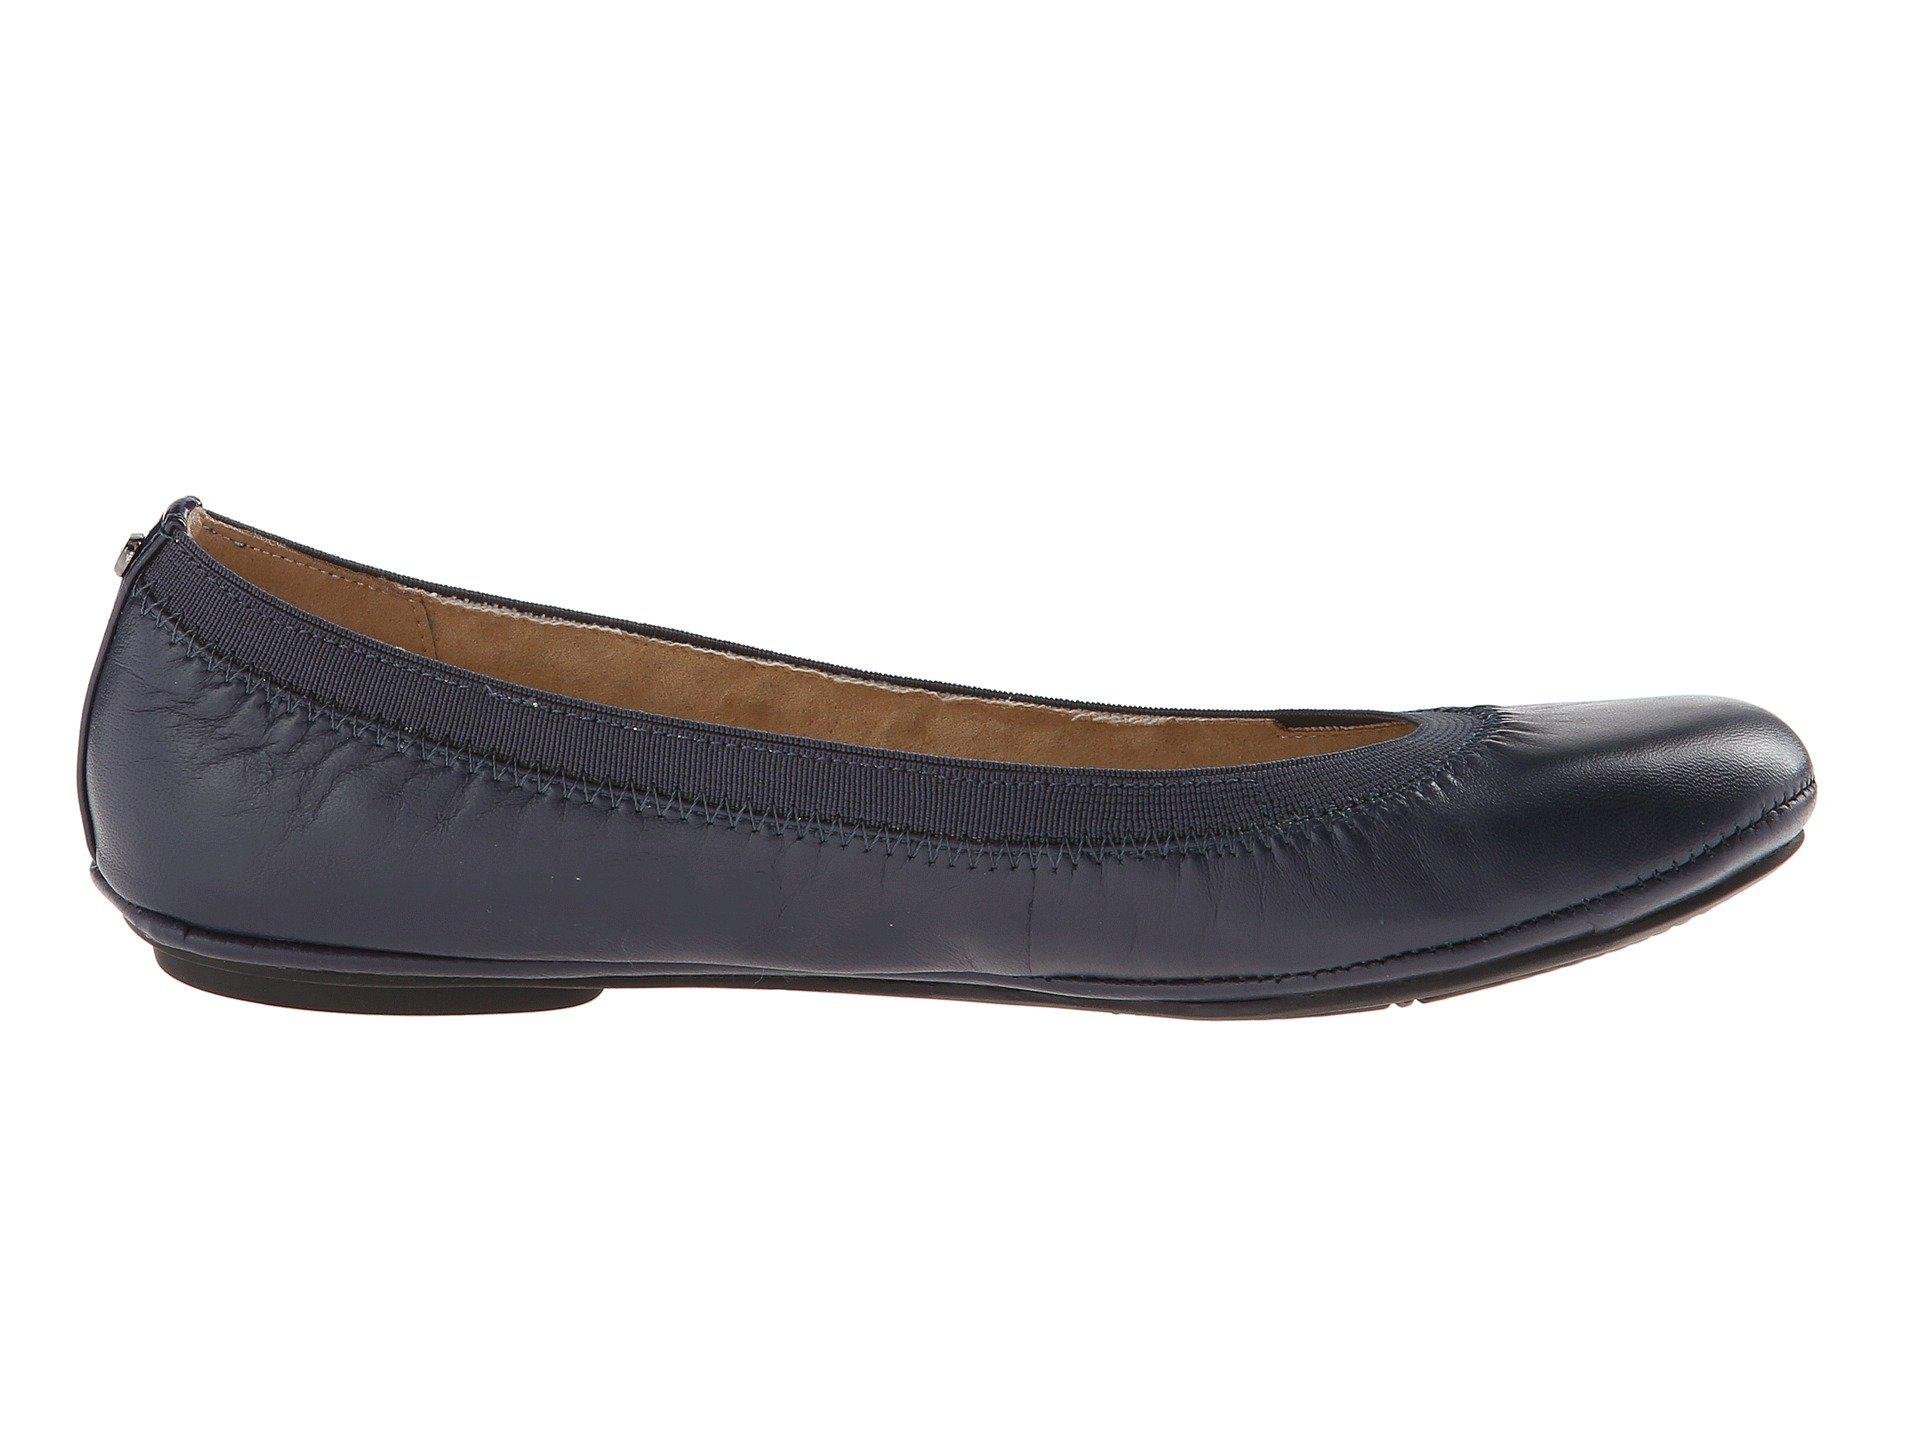 Bandolino Edition (black Multi Leather) Women's Flat Shoes - Lyst